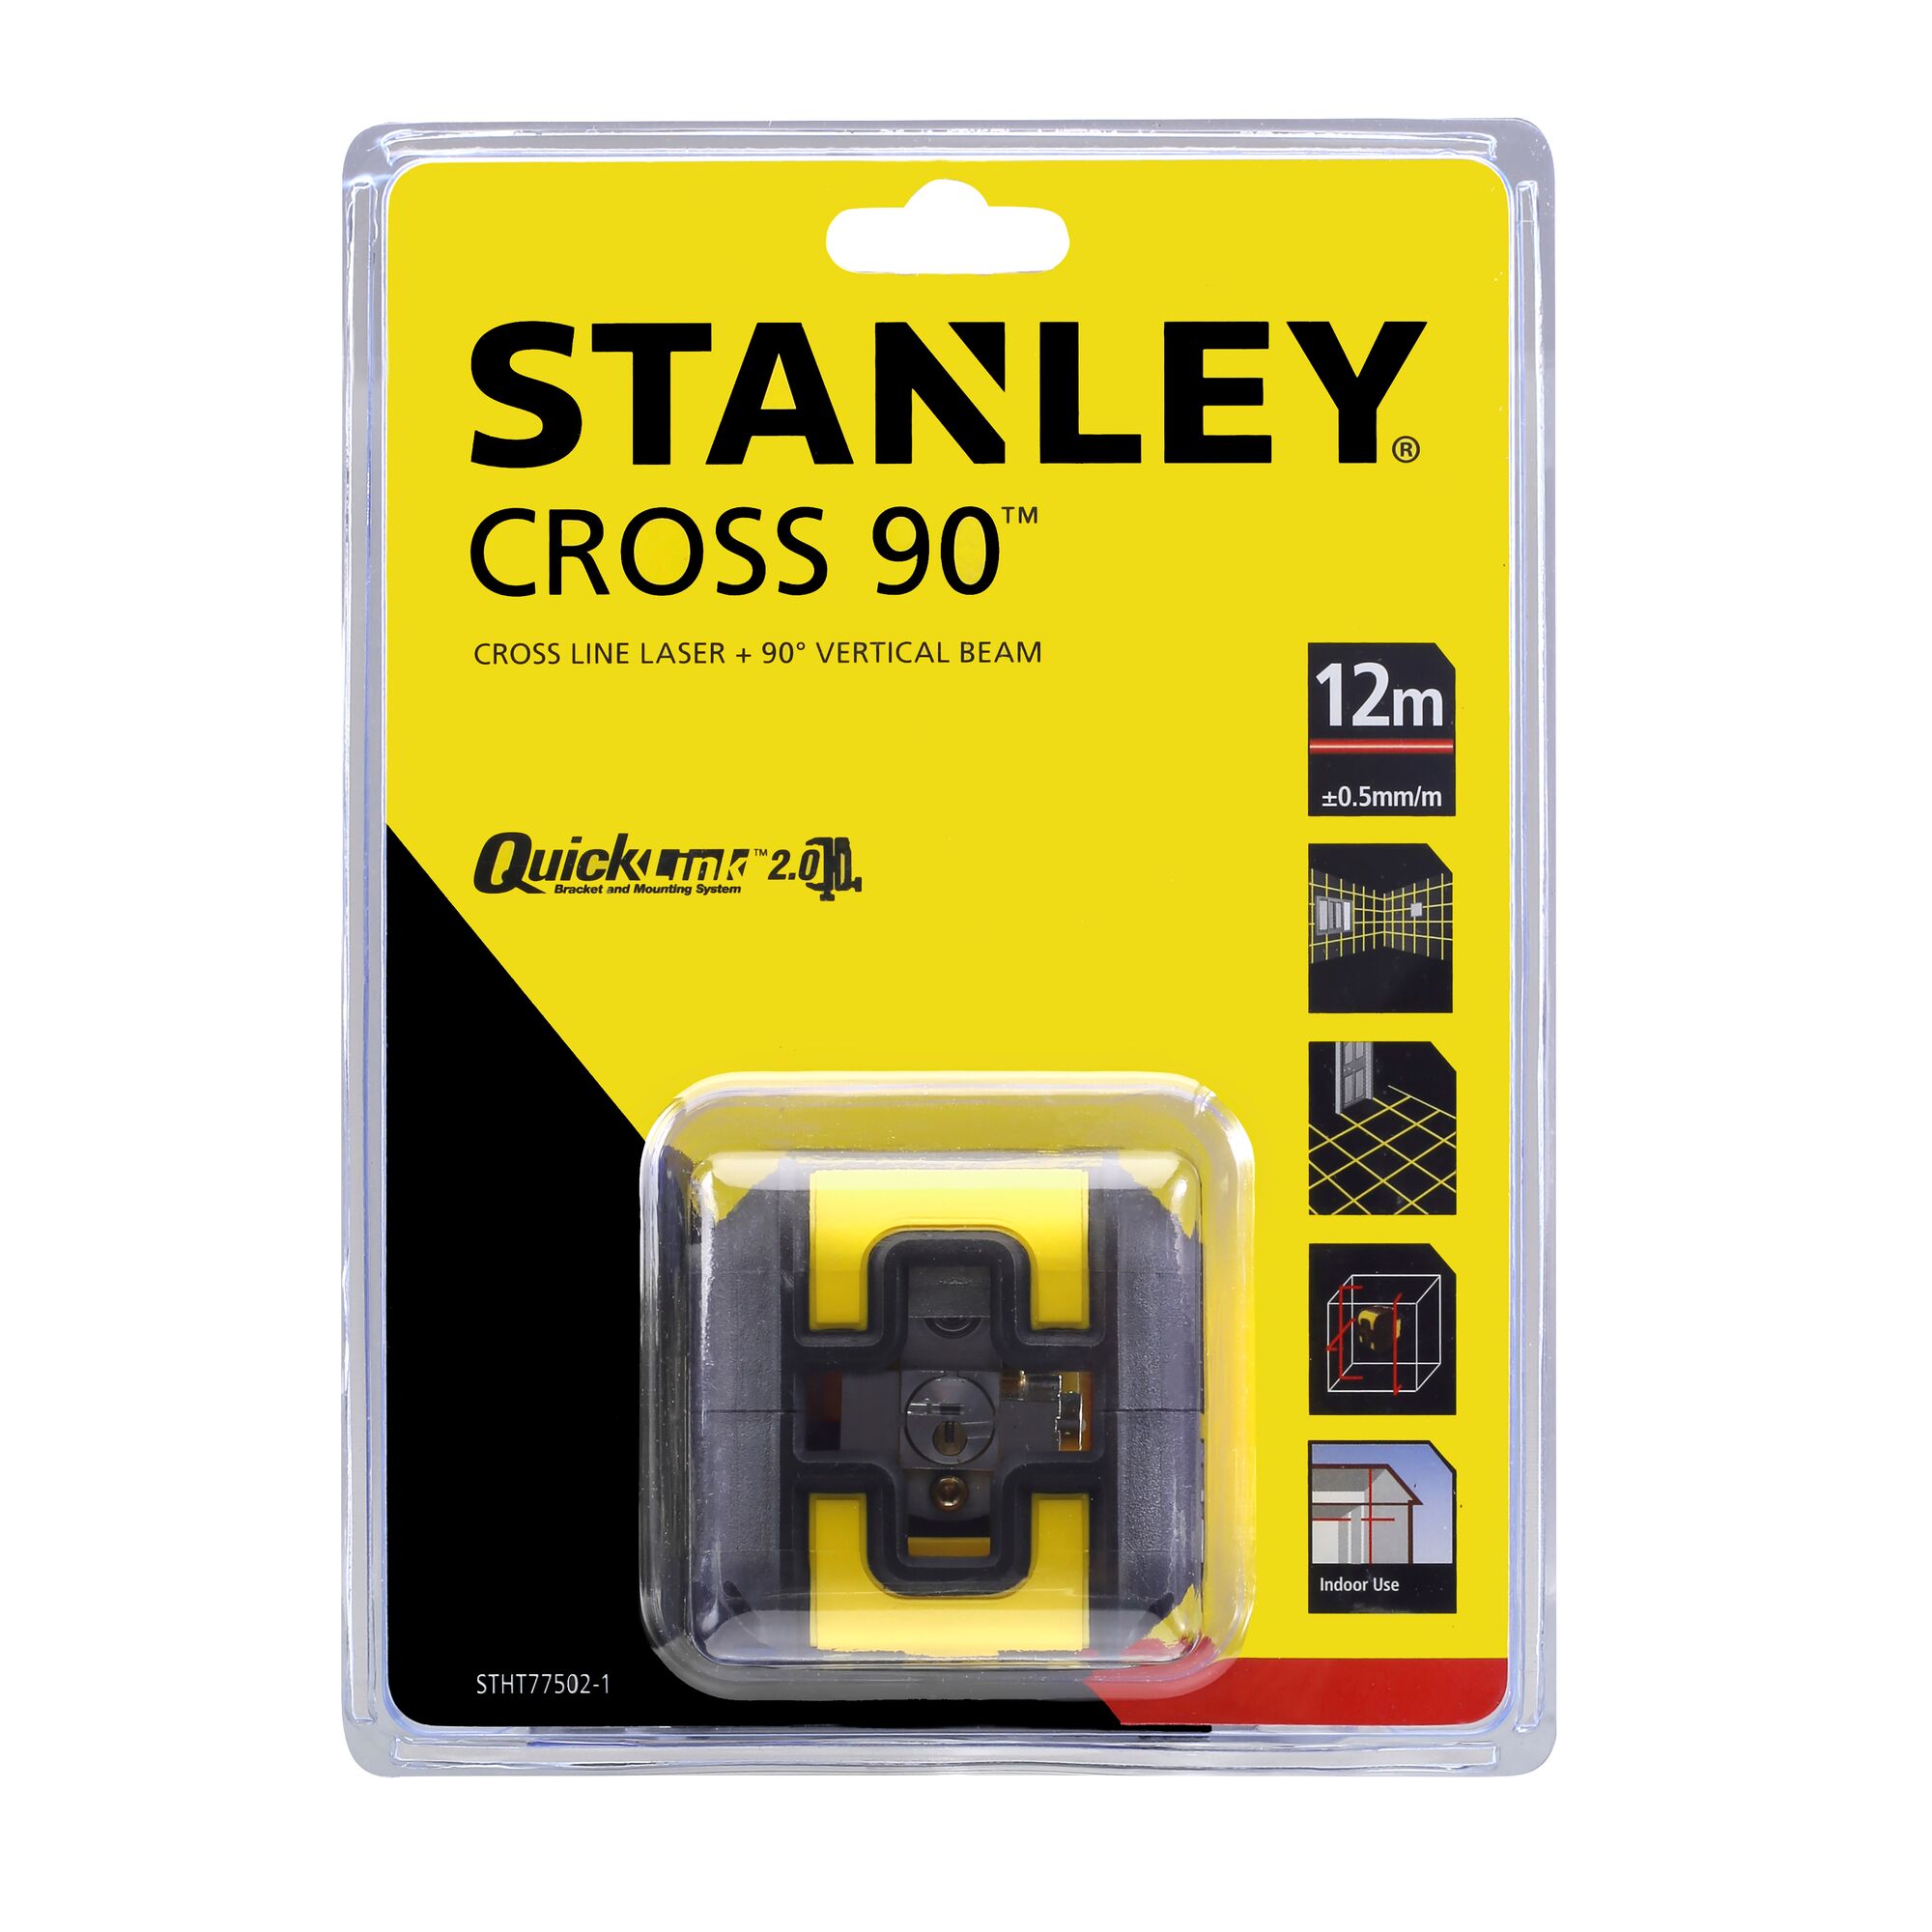 Image of Stanley Cross 90 at Amazon website